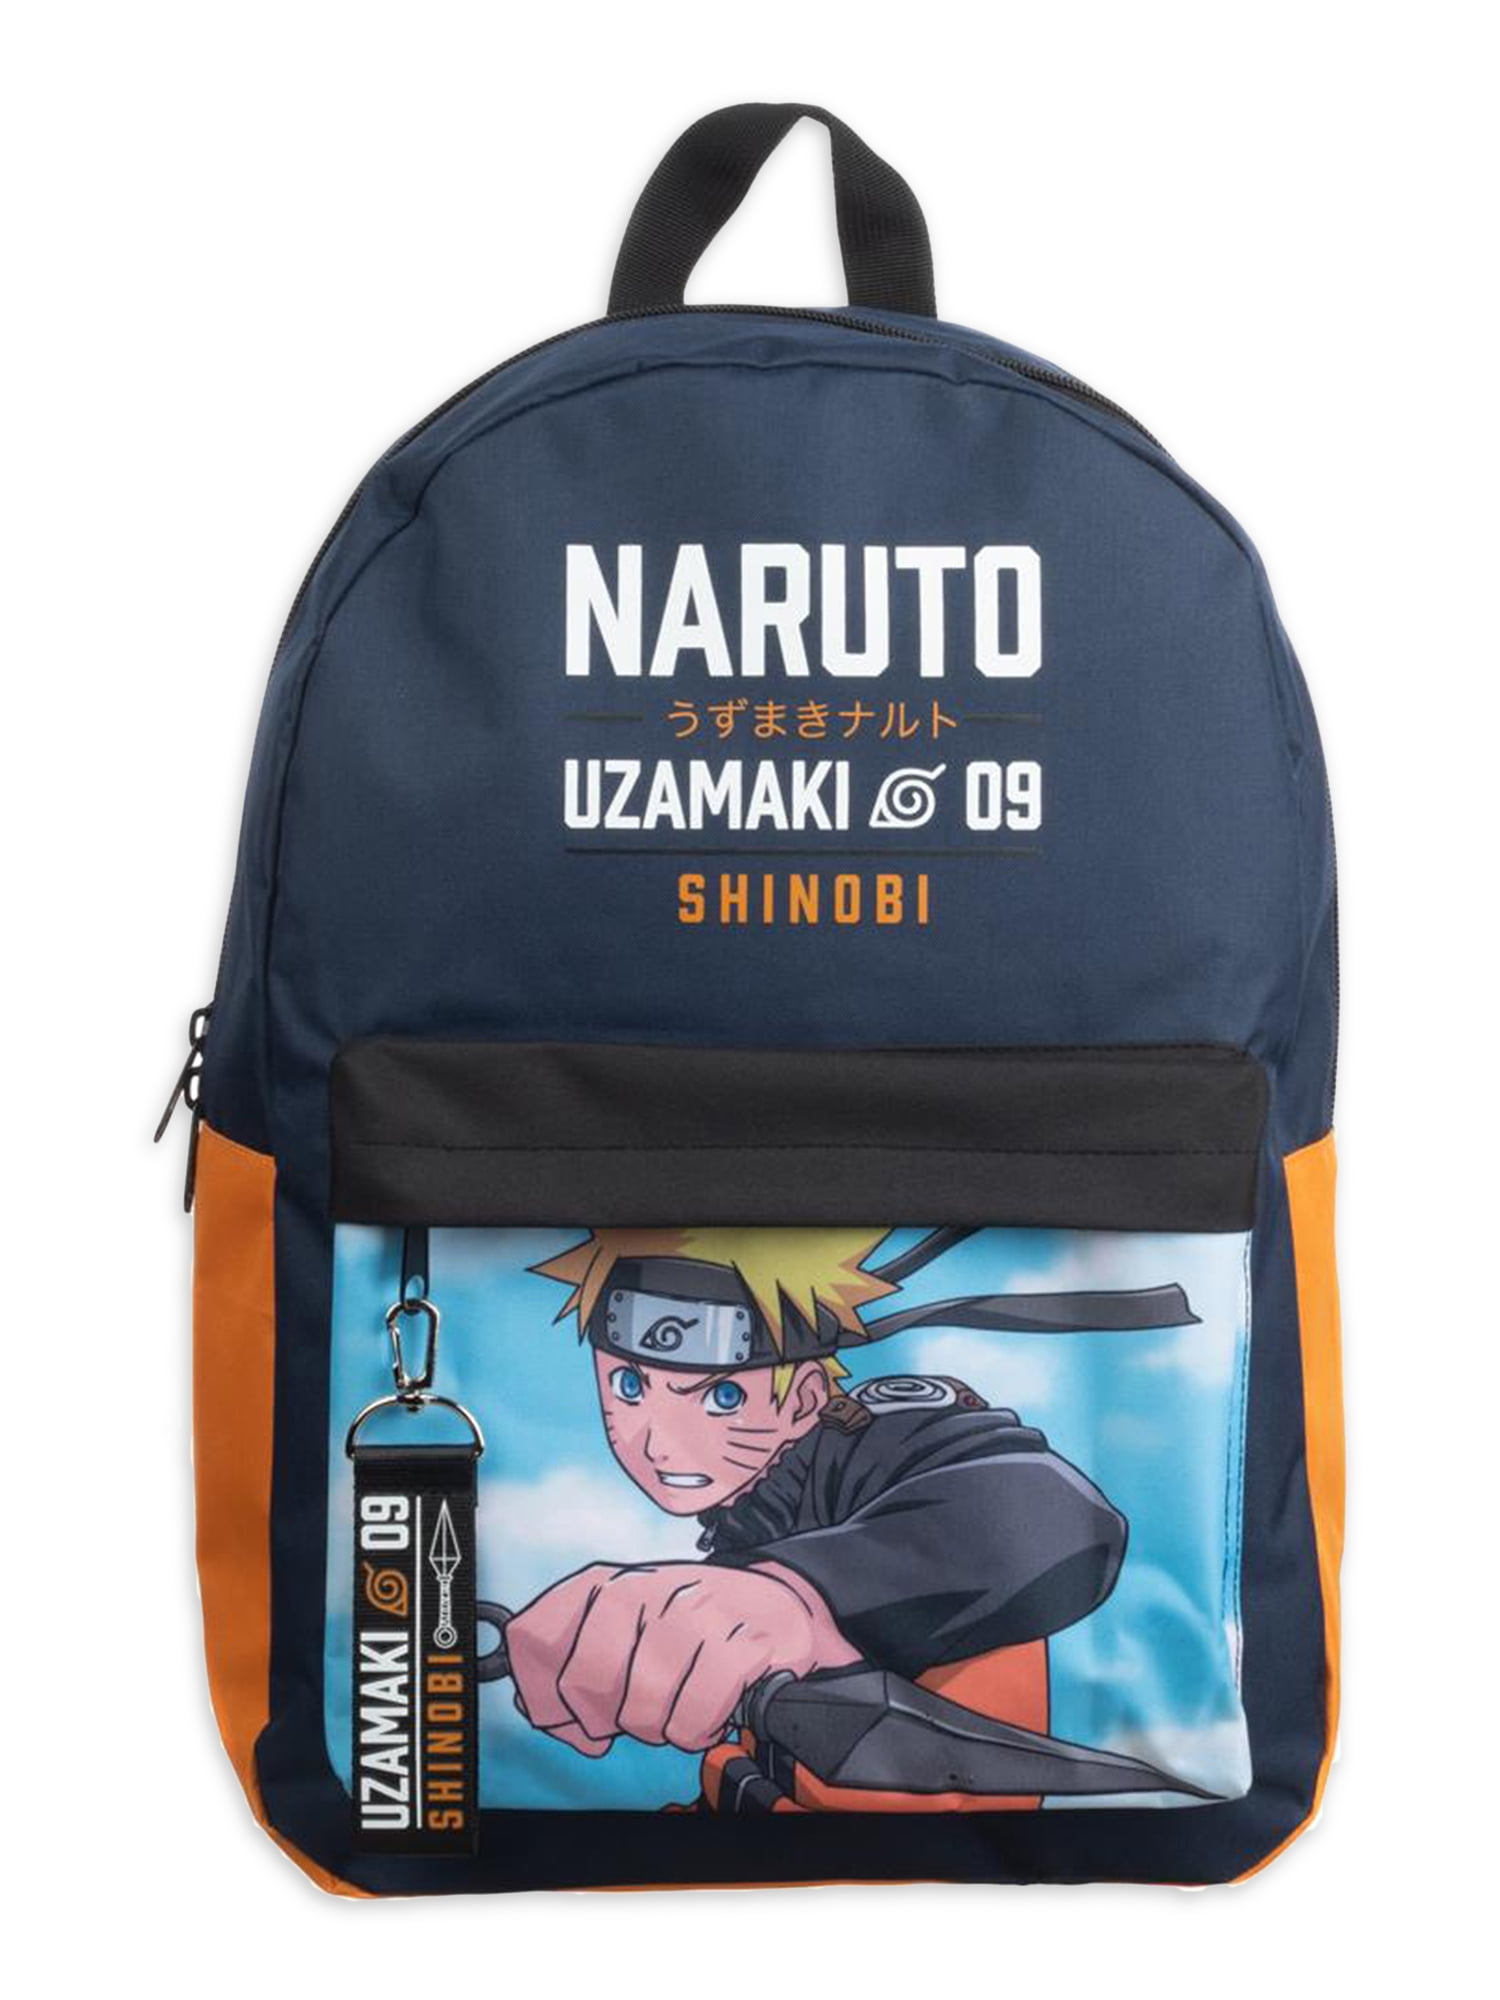 Beautiful Naruto Large Laptop Bag Travel Hiking Daypack For Men Women School Work Backpack 17 Inch